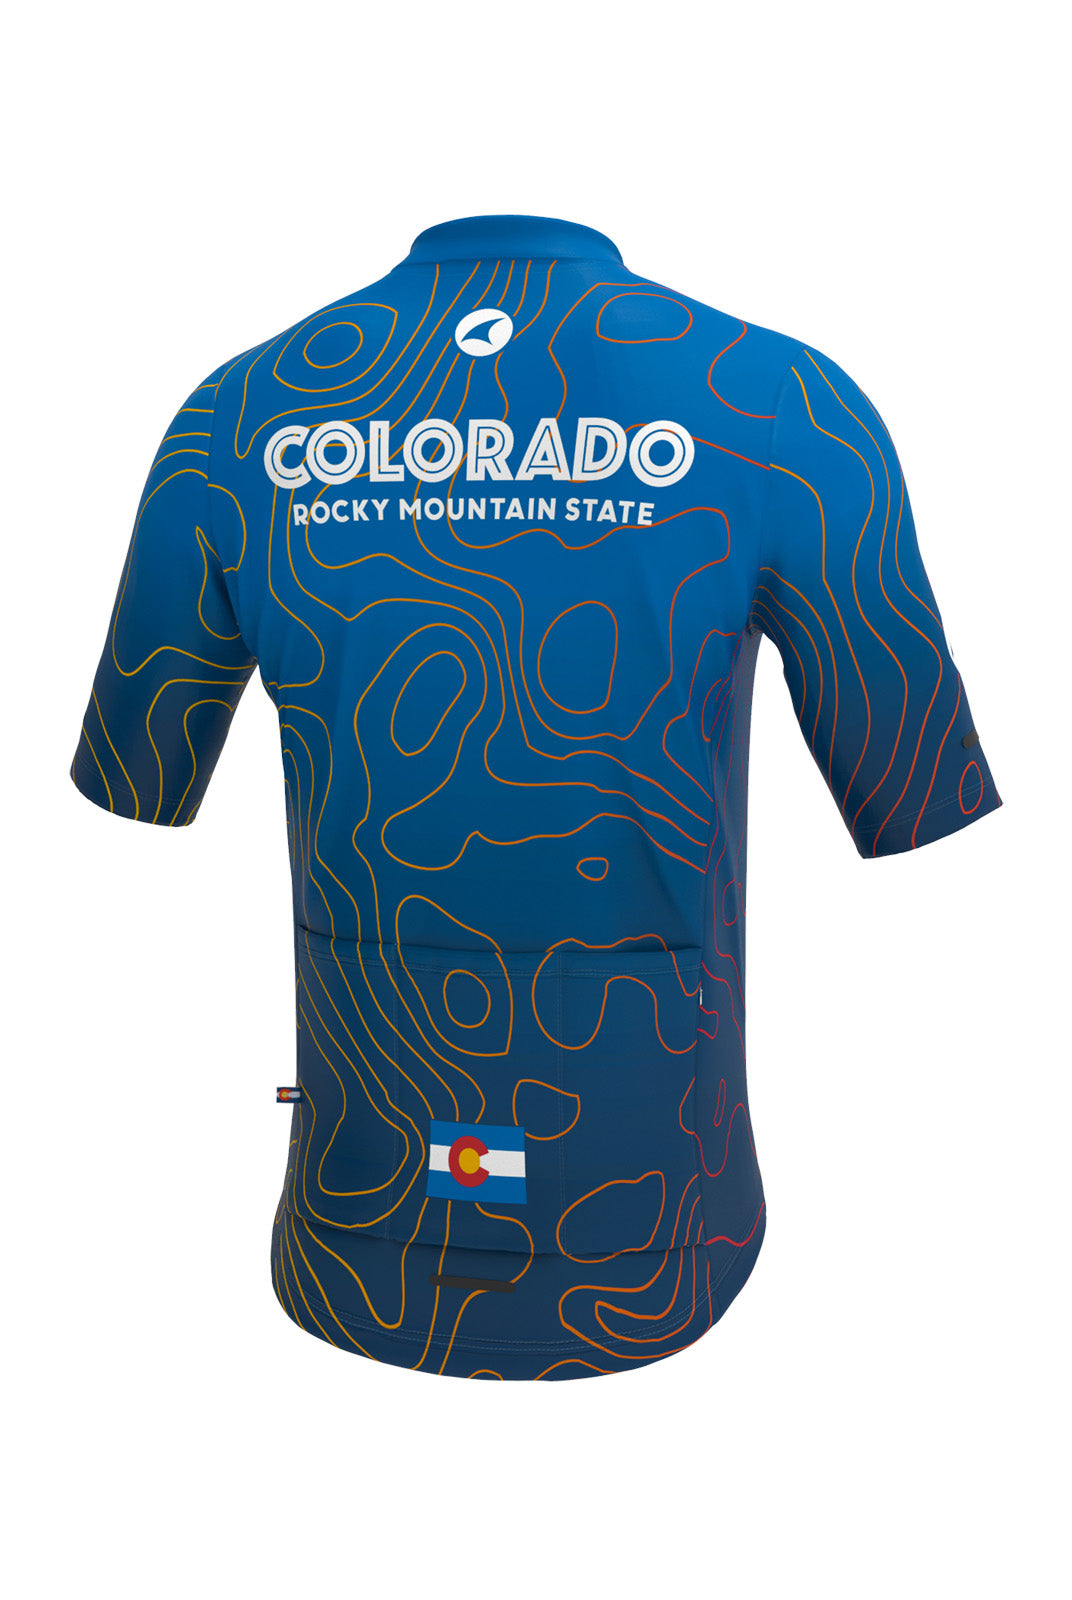 Men's Colorado Cycling Jersey - Dusk Ombre